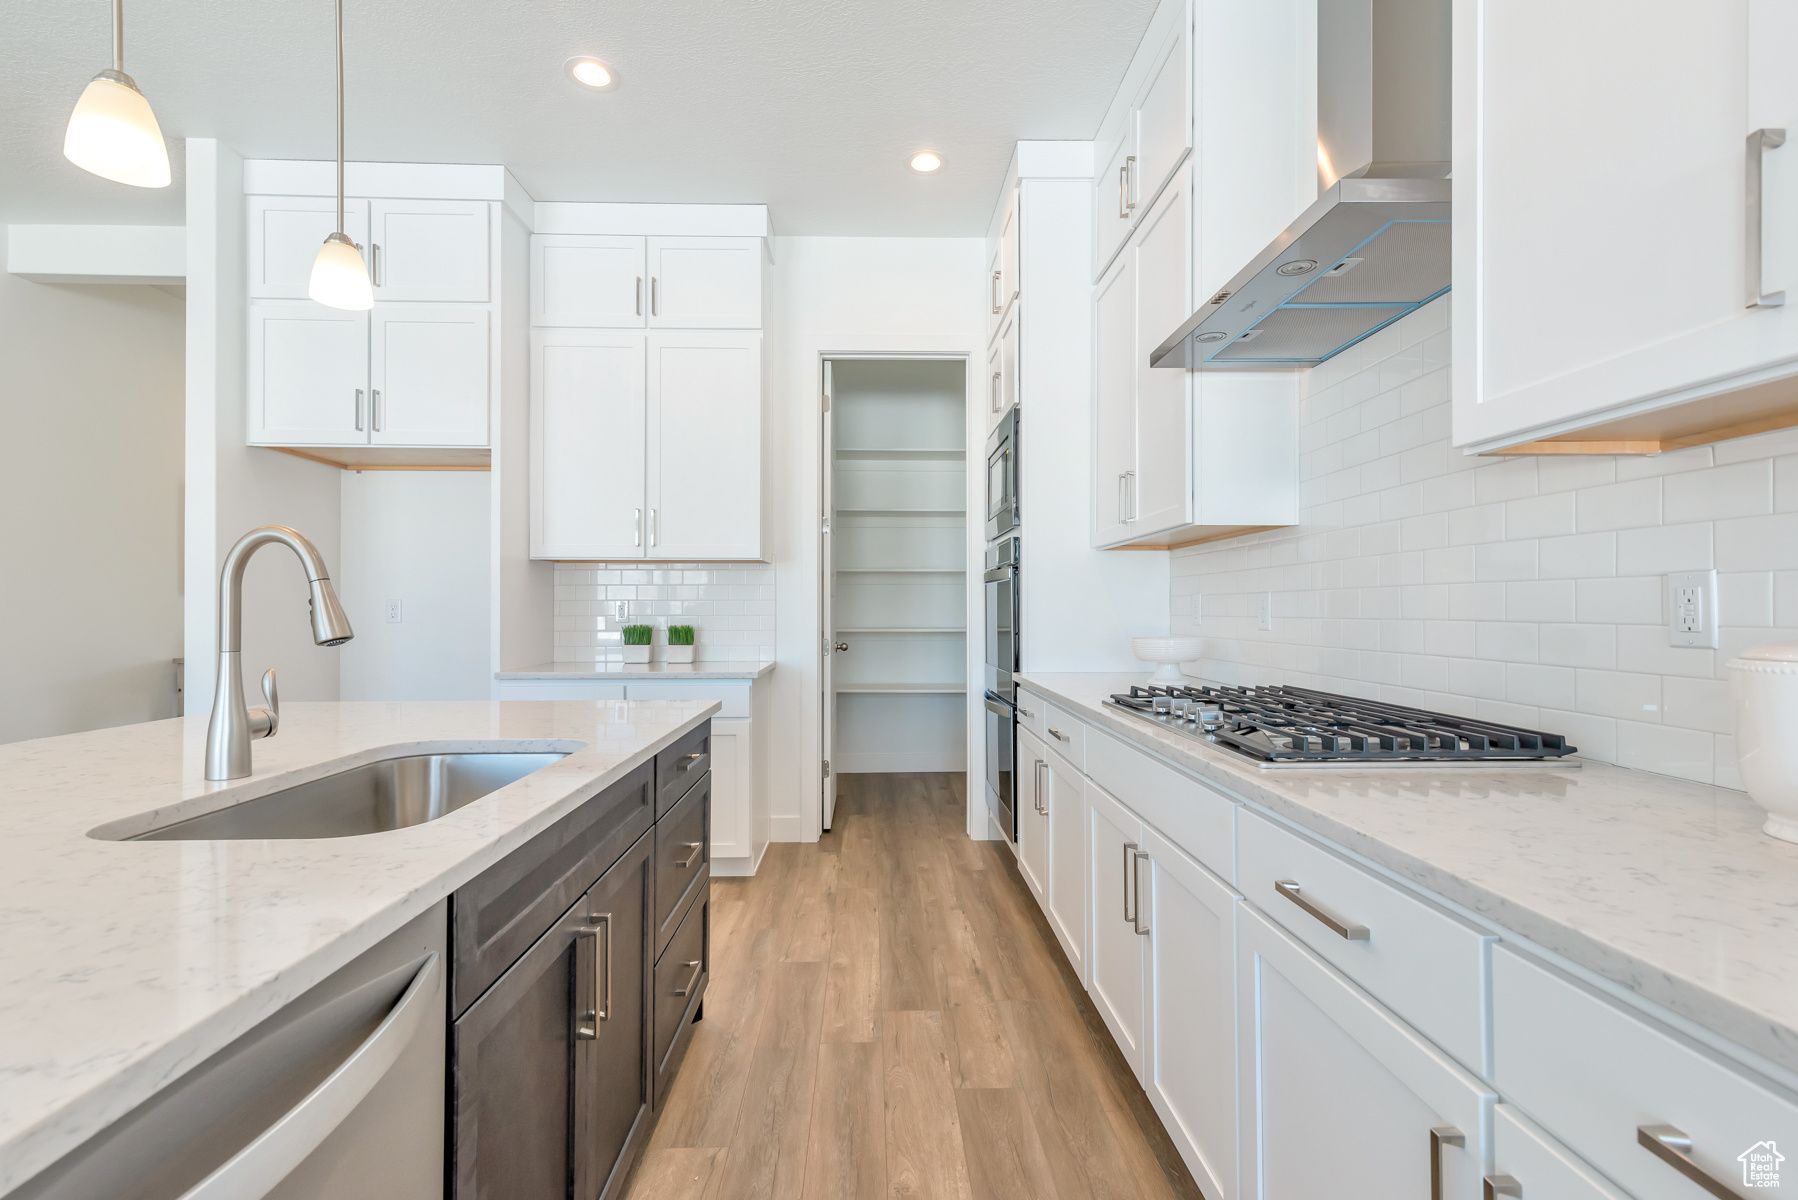 Kitchen with hood, hanging light fixtures, white cabinets, light wood-type flooring, and tasteful backsplash